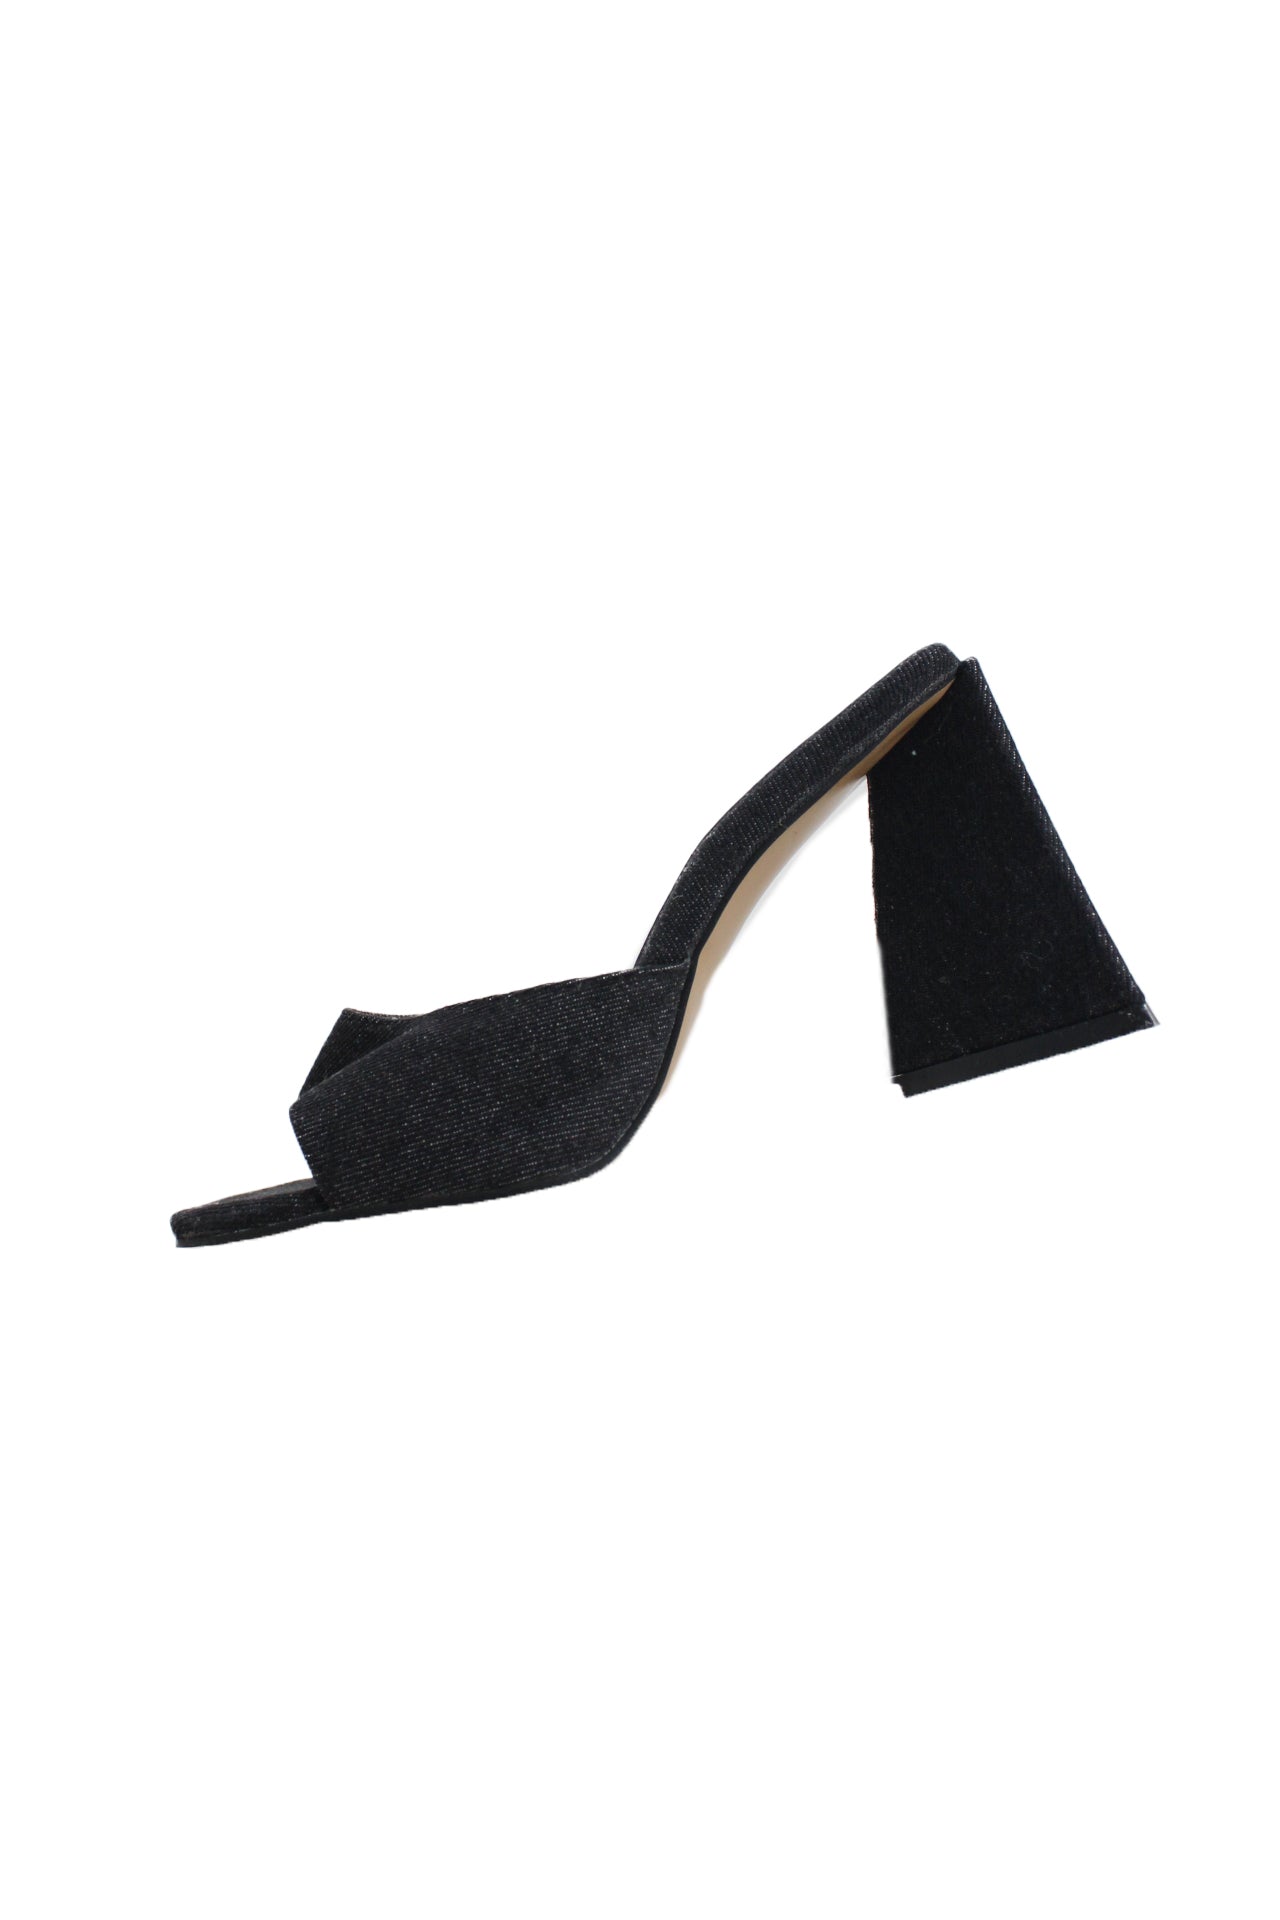 description: sabot dark denim heels. features square toe silhouette, slip on style, and triangular block heel. 